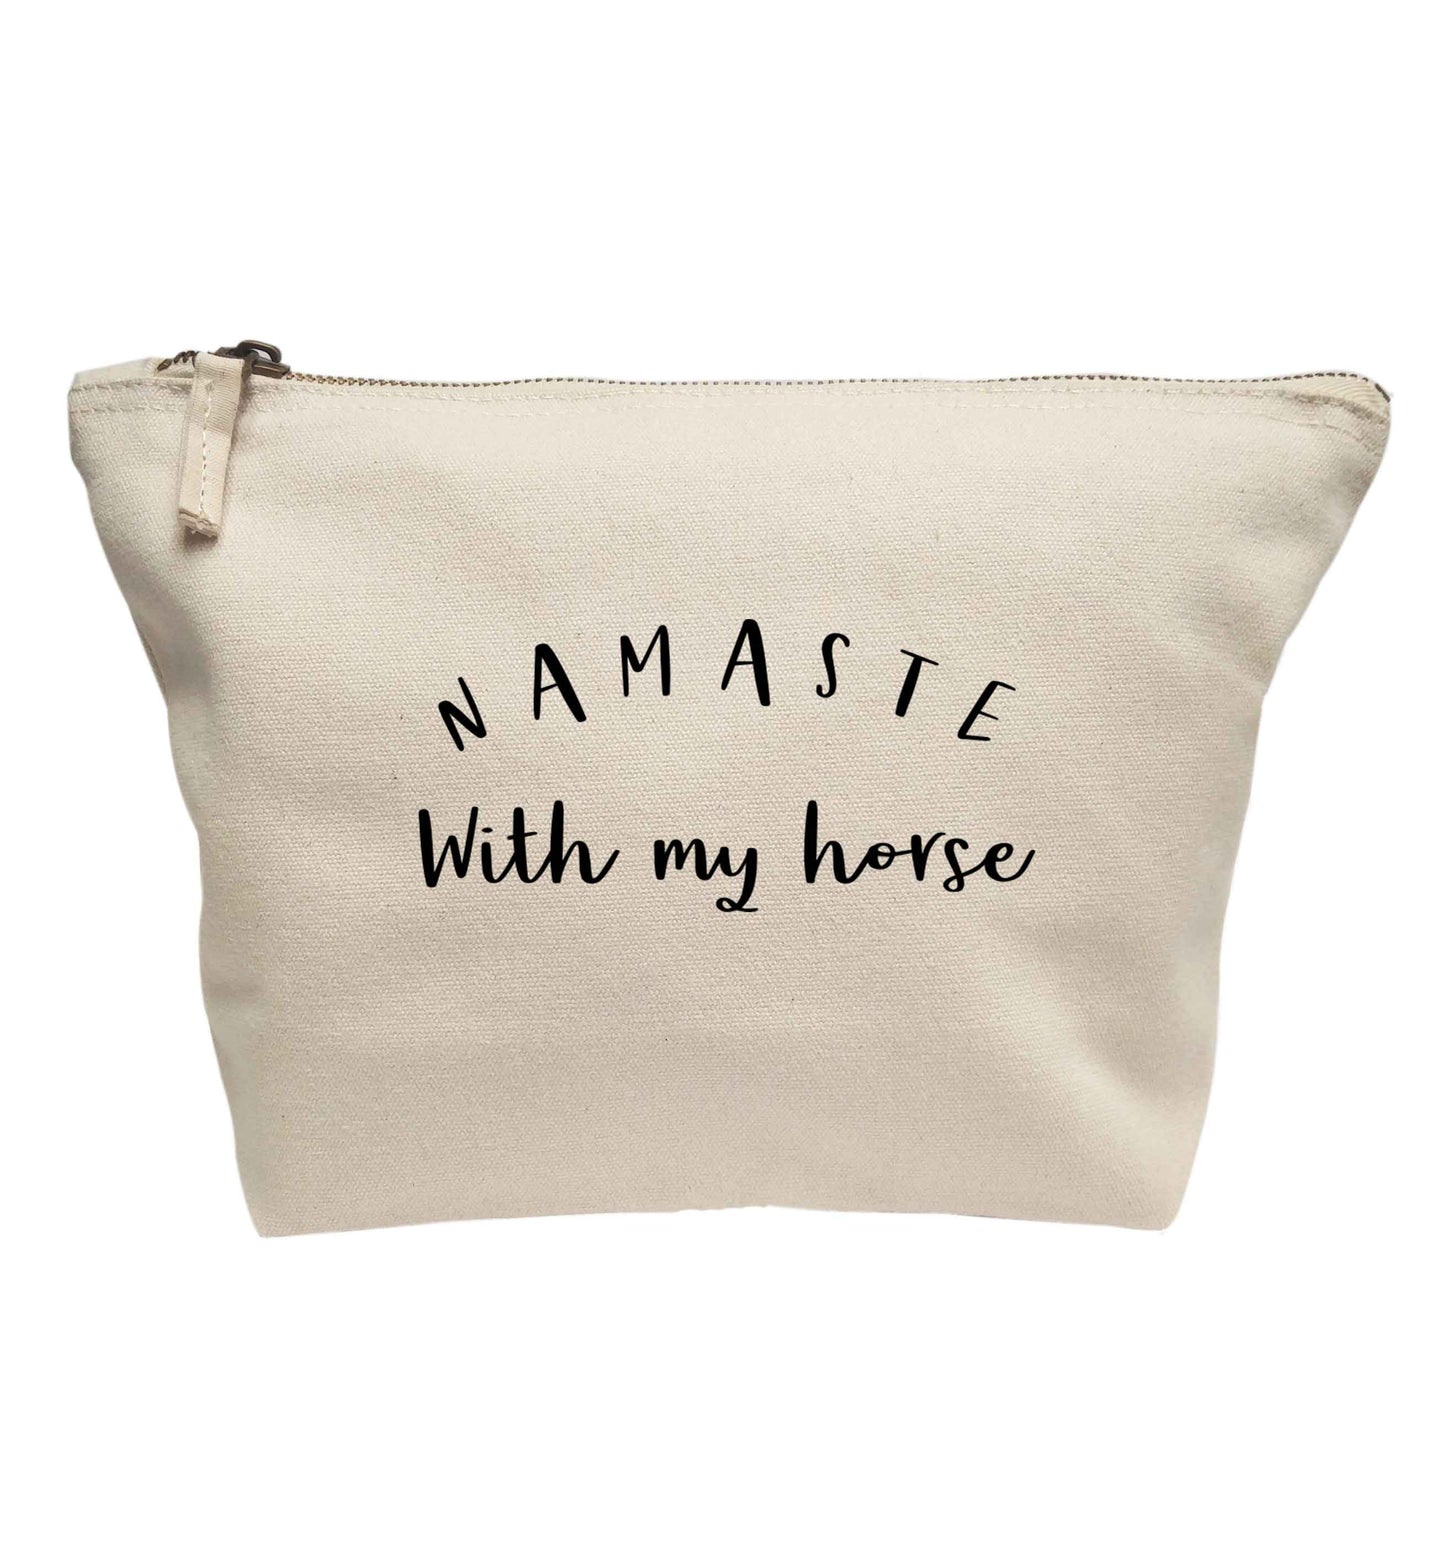 Namaste with my horse | Makeup / wash bag